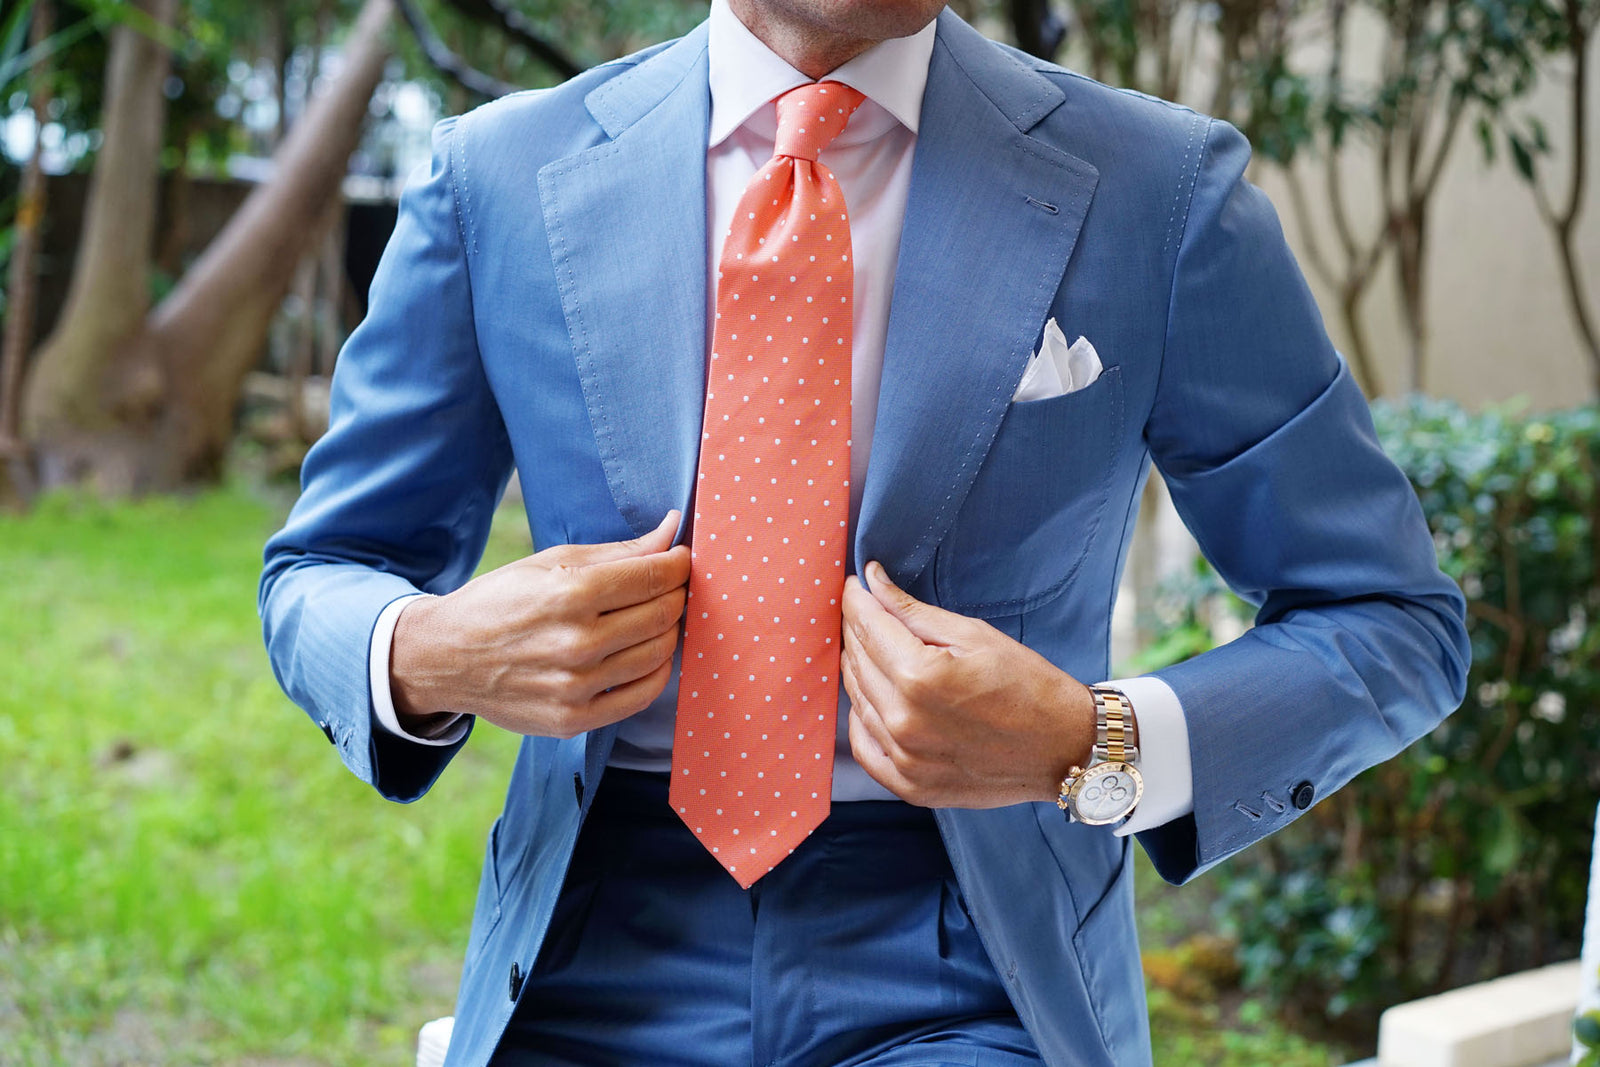 Coral Orange With White Polka Dots Necktie Best Wedding Ties For Men